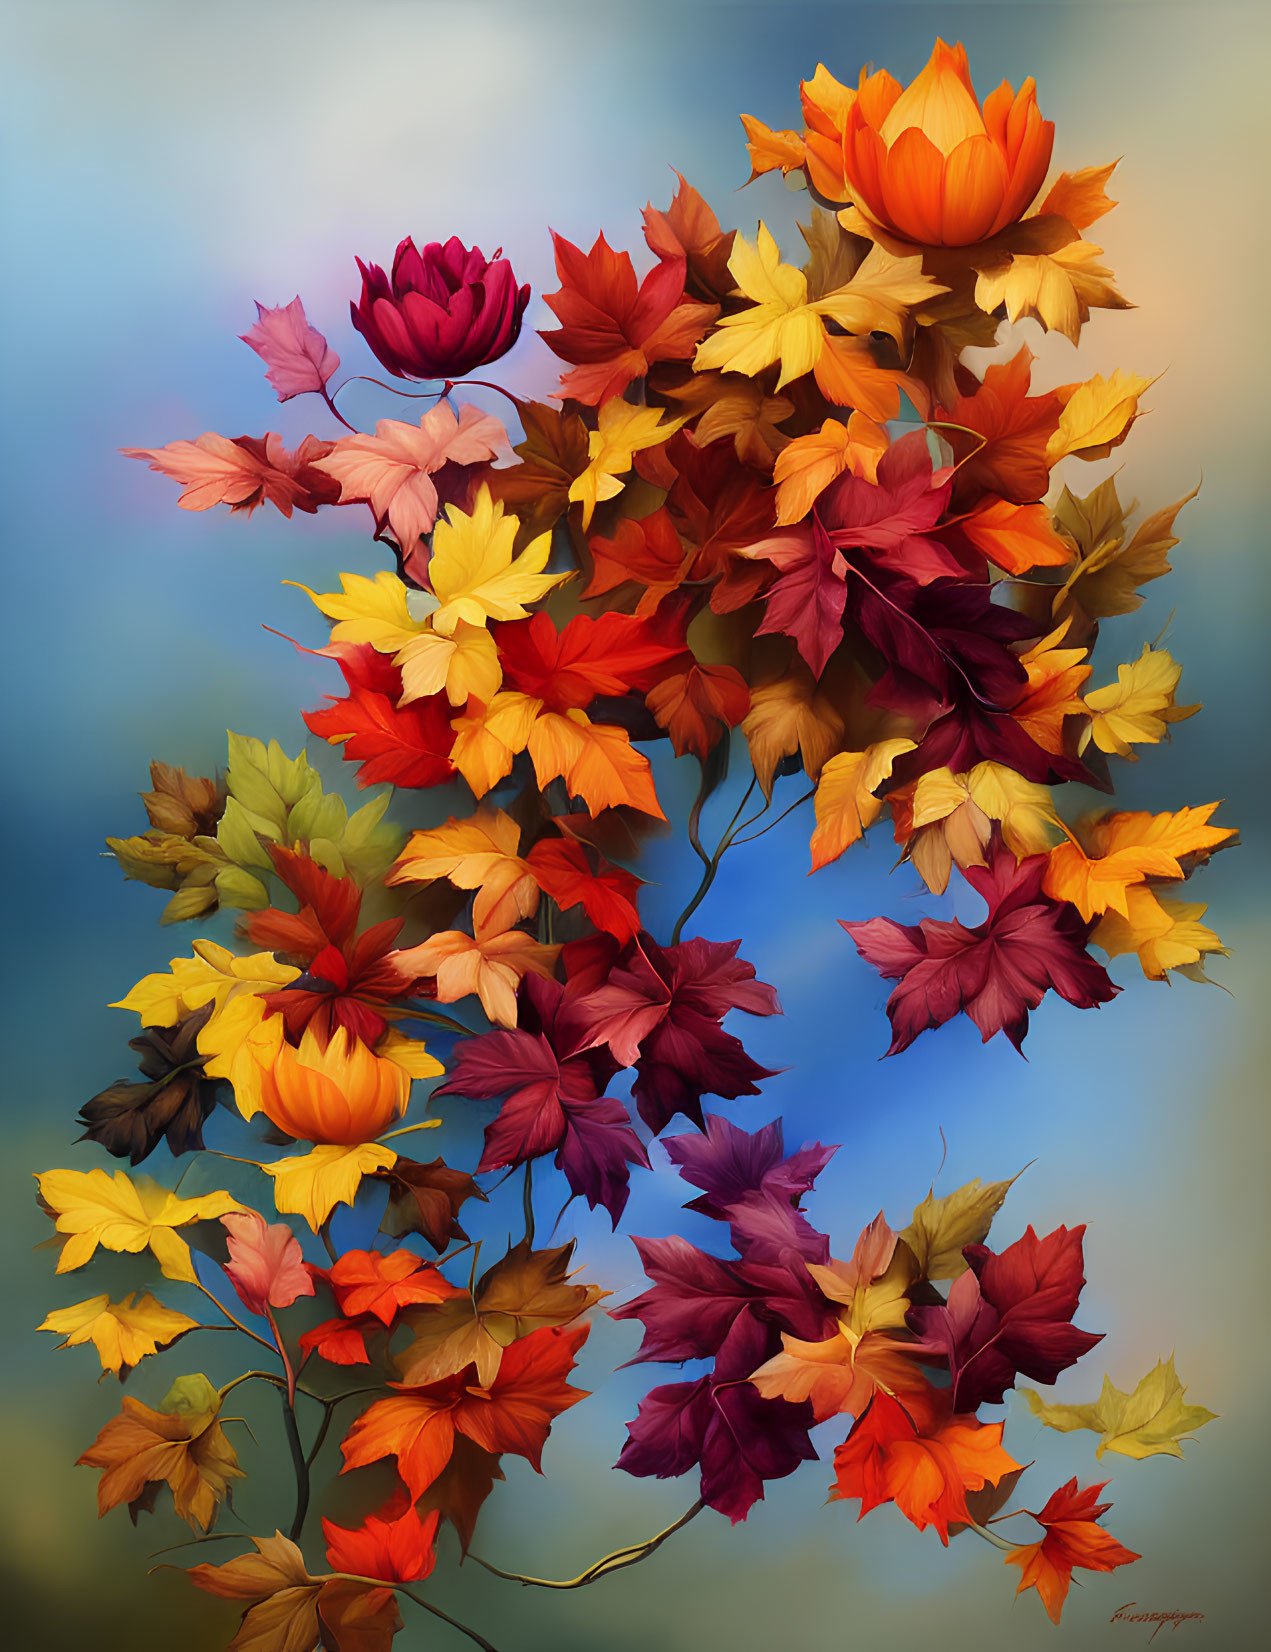 Colorful Autumn Leaves Arrangement on Blue Background